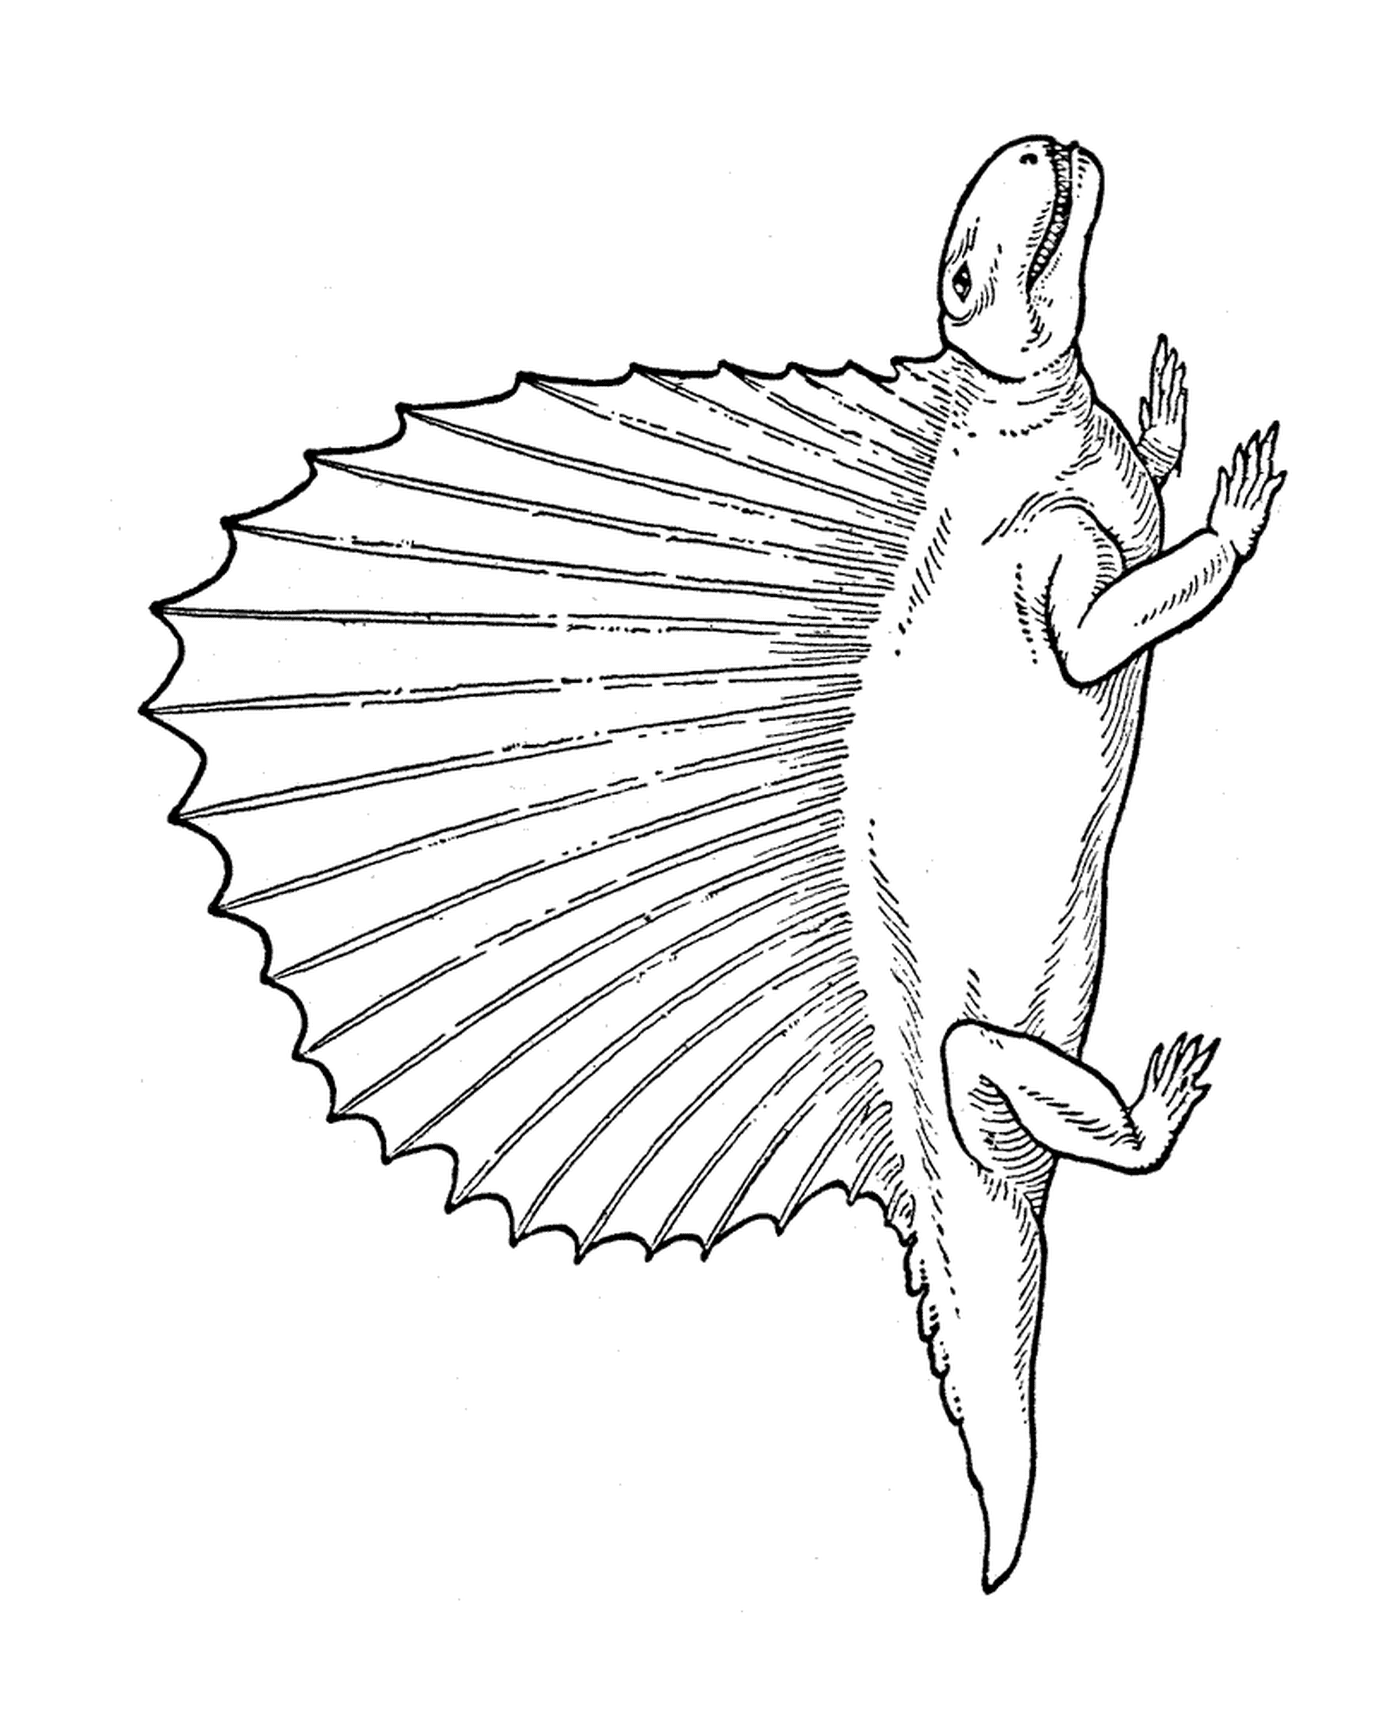  A long-tailed lizard 